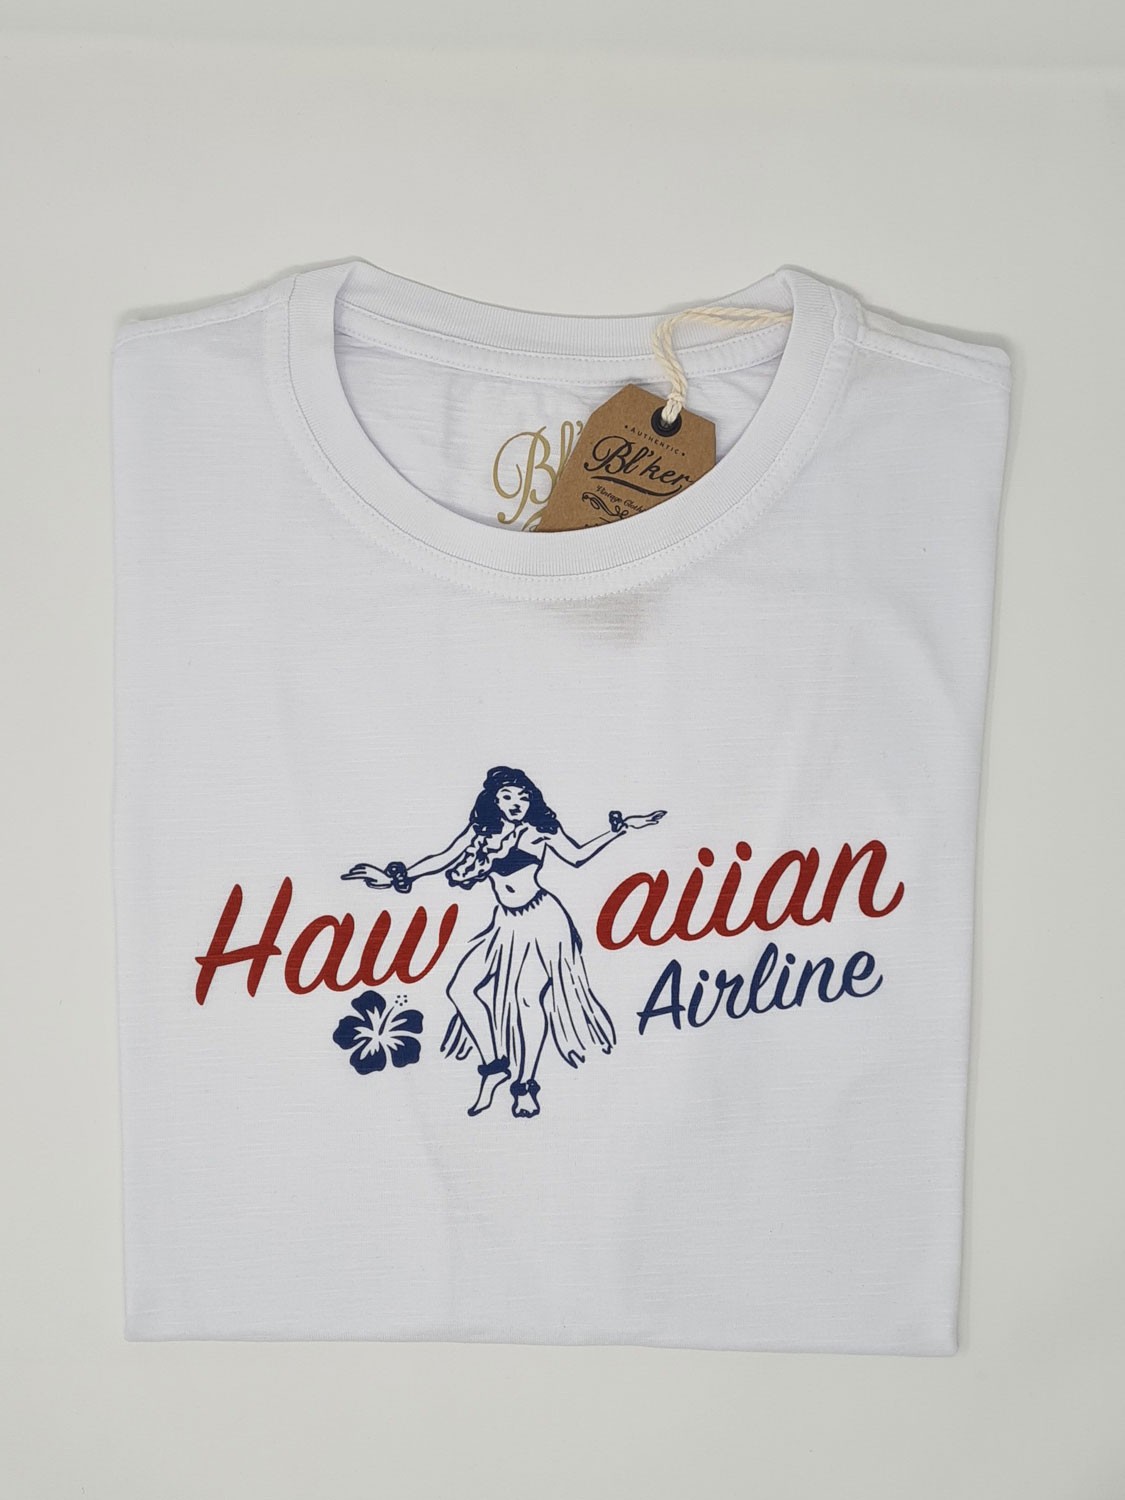 Bl'ker Men's T-shirt Graphic Hawaian Airline